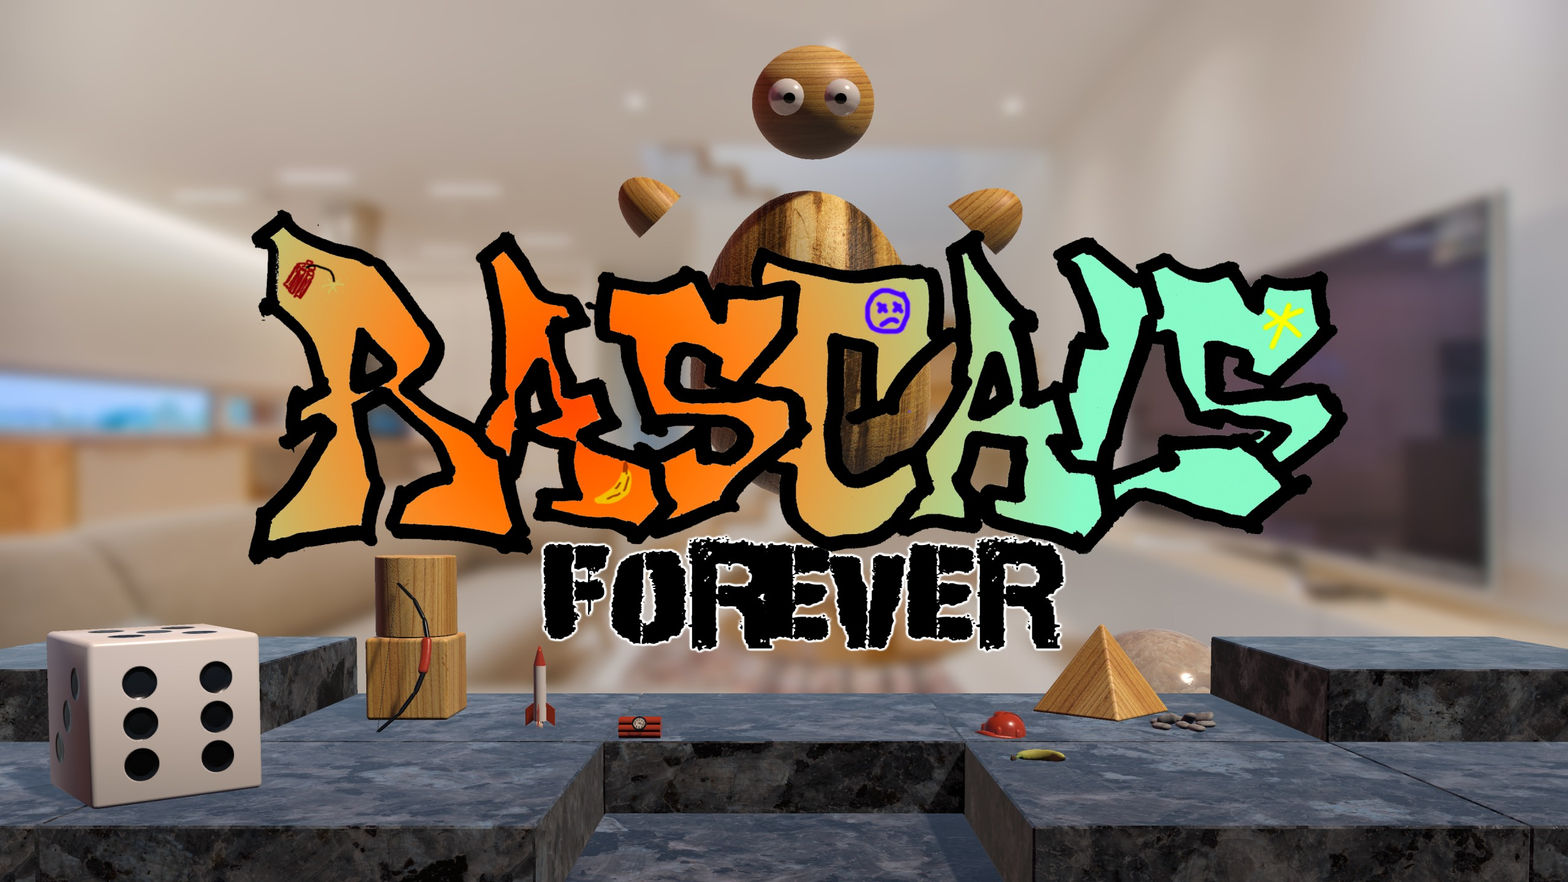 Rascals Forever